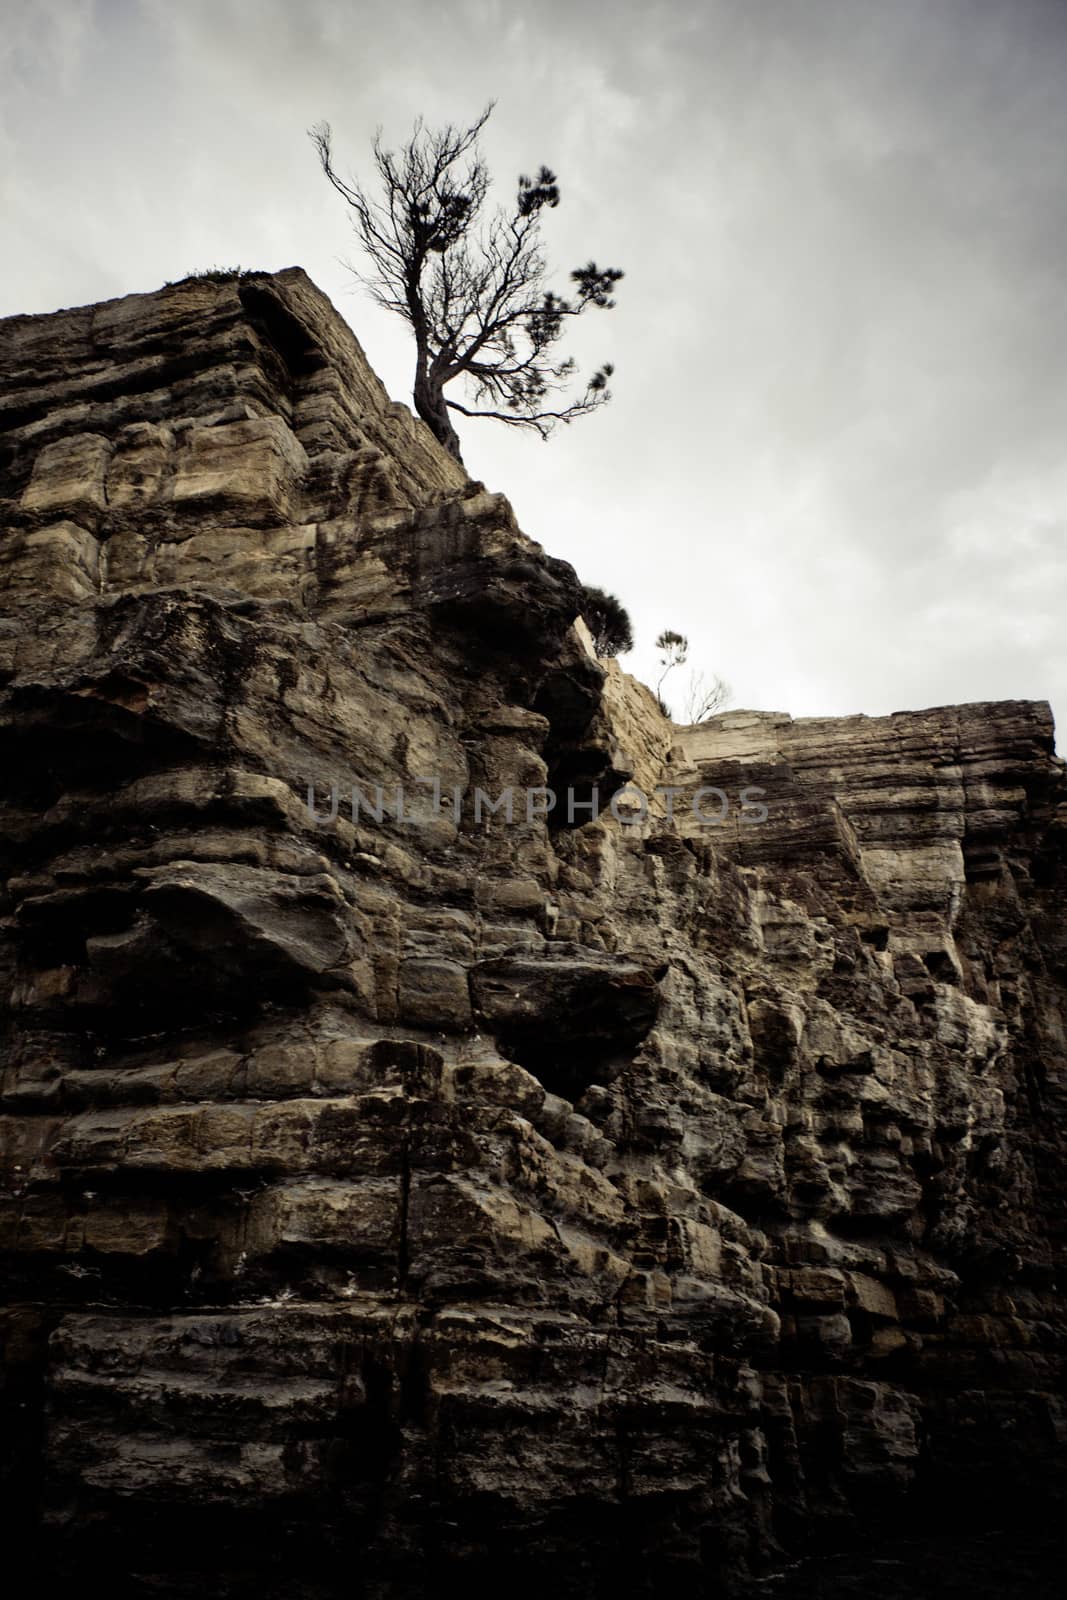 Arid tree on cliffs by jrstock